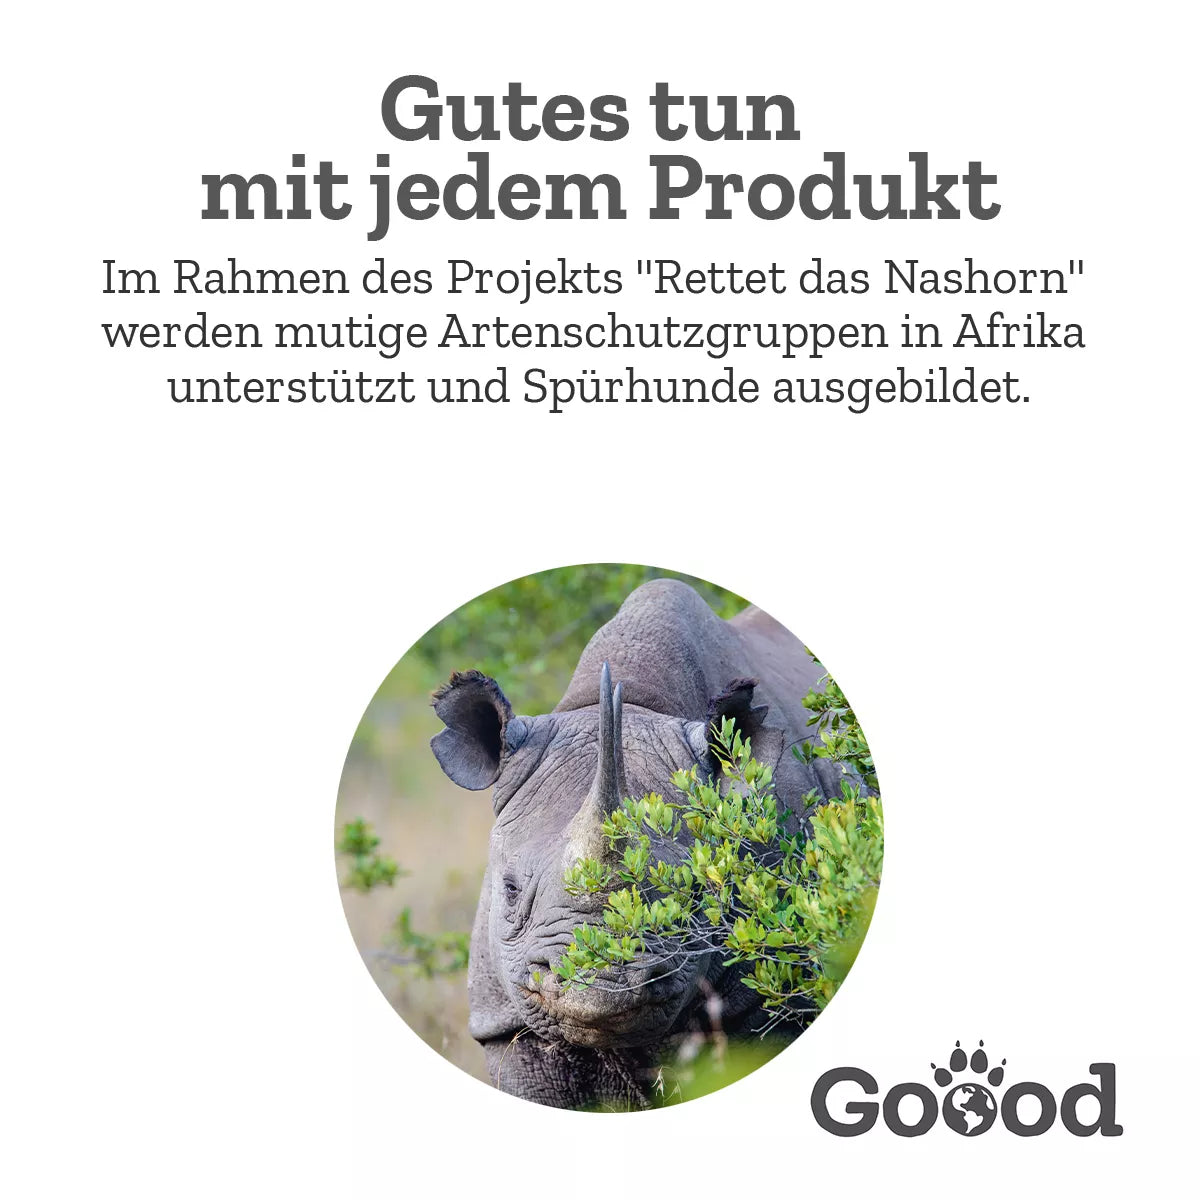 GOOOD Adult Soft Gooodies - Freilandlamm, 100g